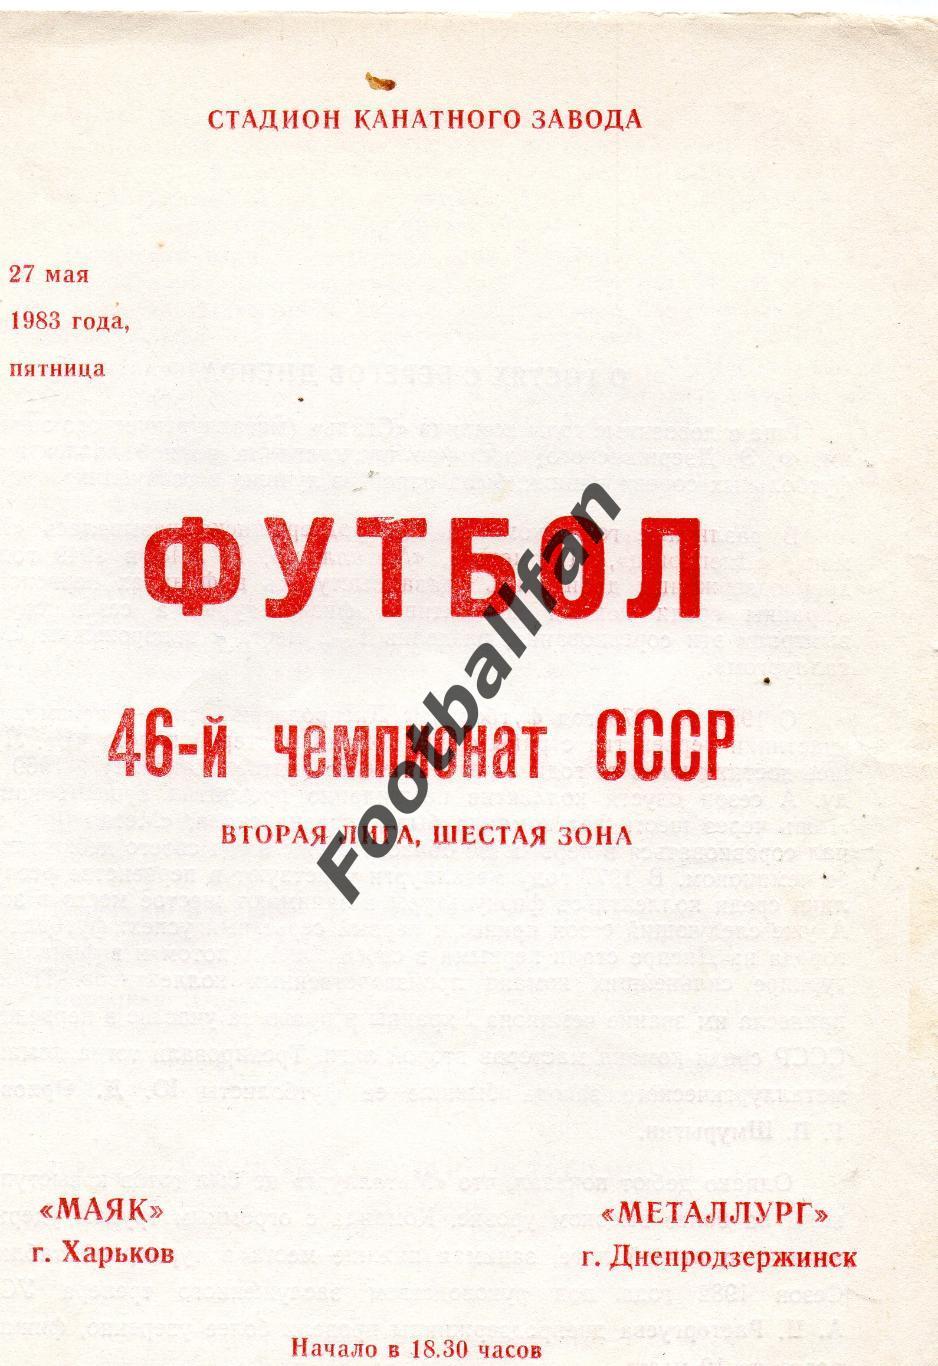 Маяк Харьков - Металлург Днепродзержинск 27.06.1983